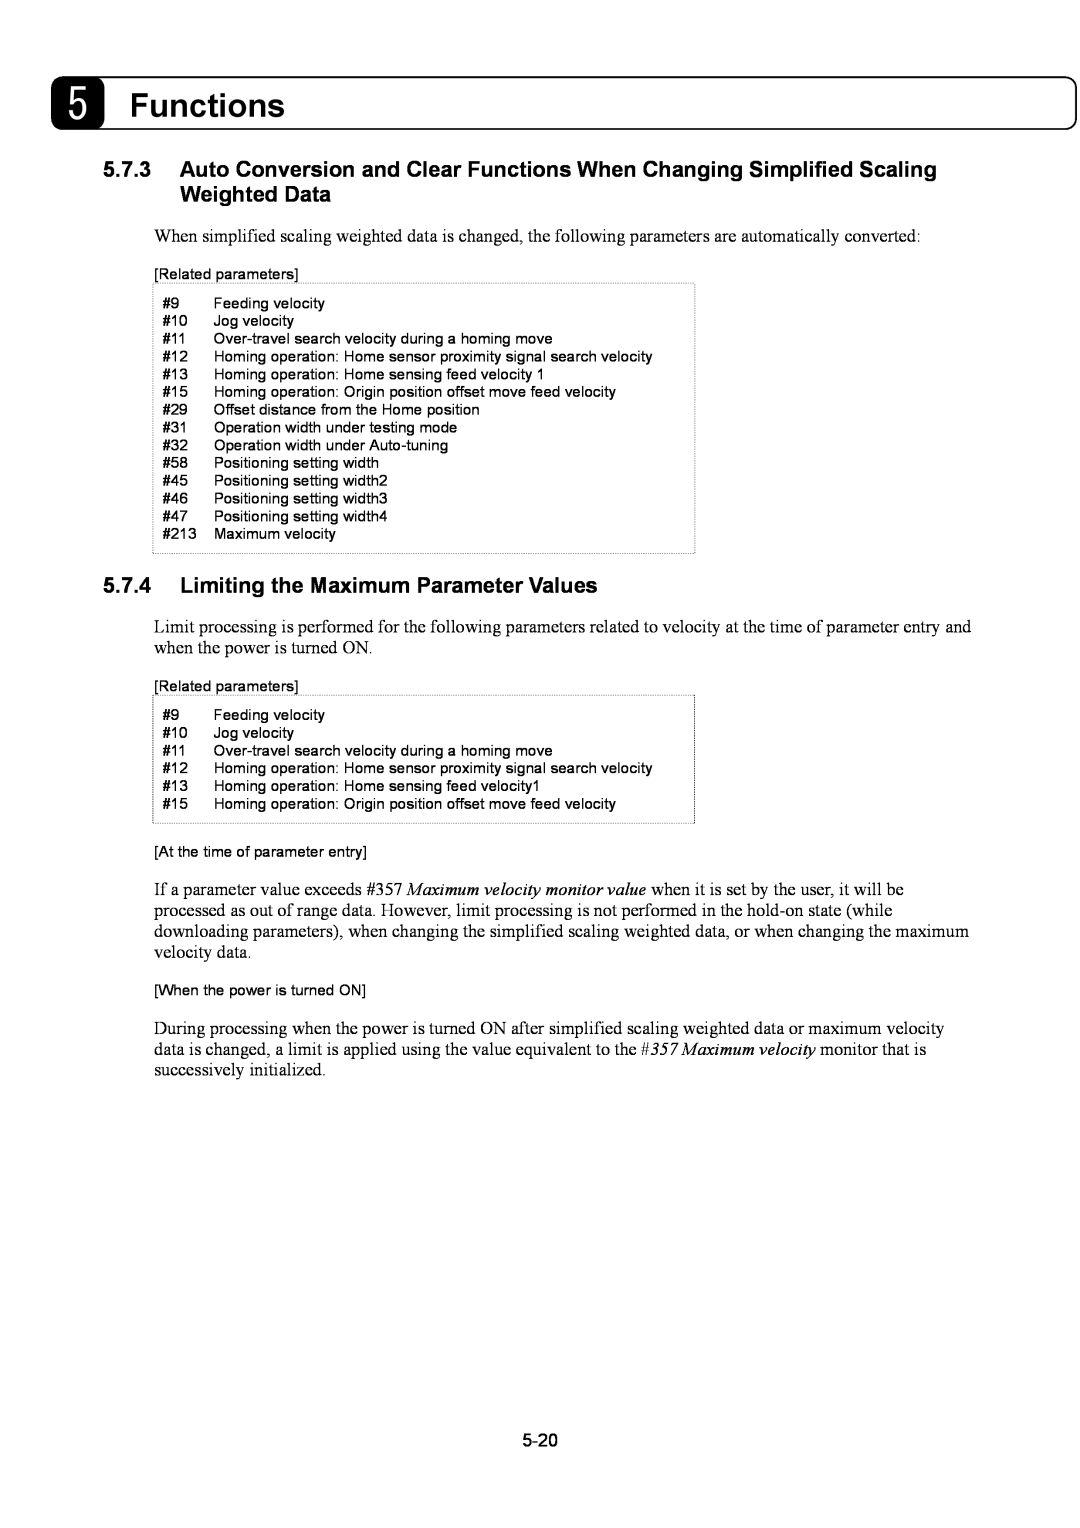 Parker Hannifin G2 manual Limiting the Maximum Parameter Values, Functions 